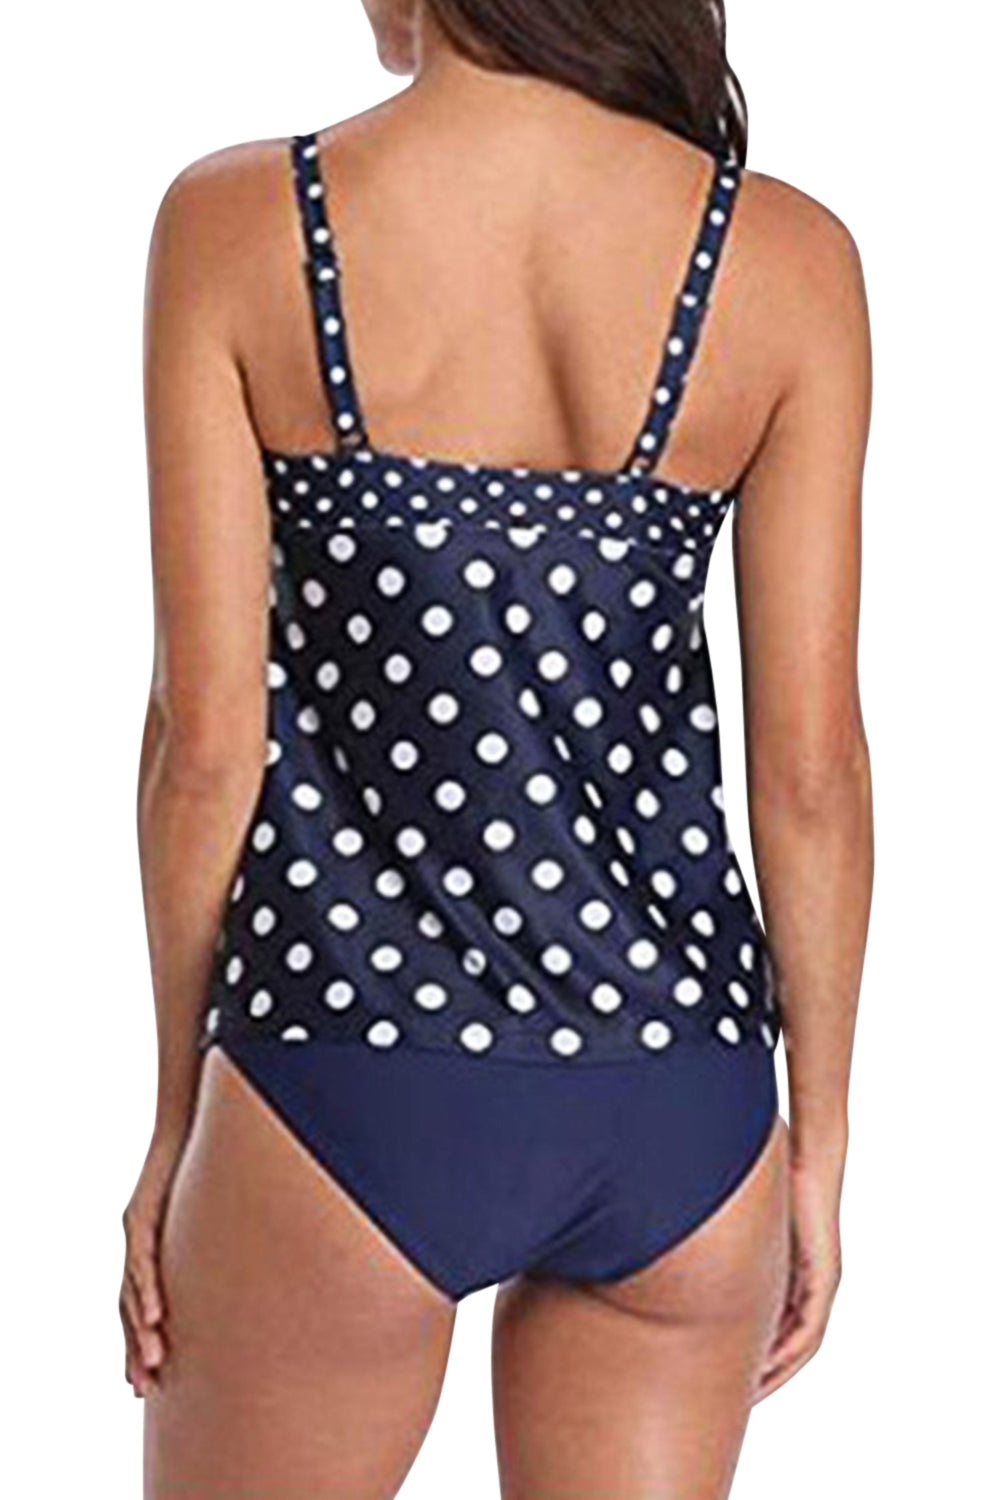 Iyasson Womens High Waisted Two Pieces Bikini Set Padded Polka Dot Swimsuit